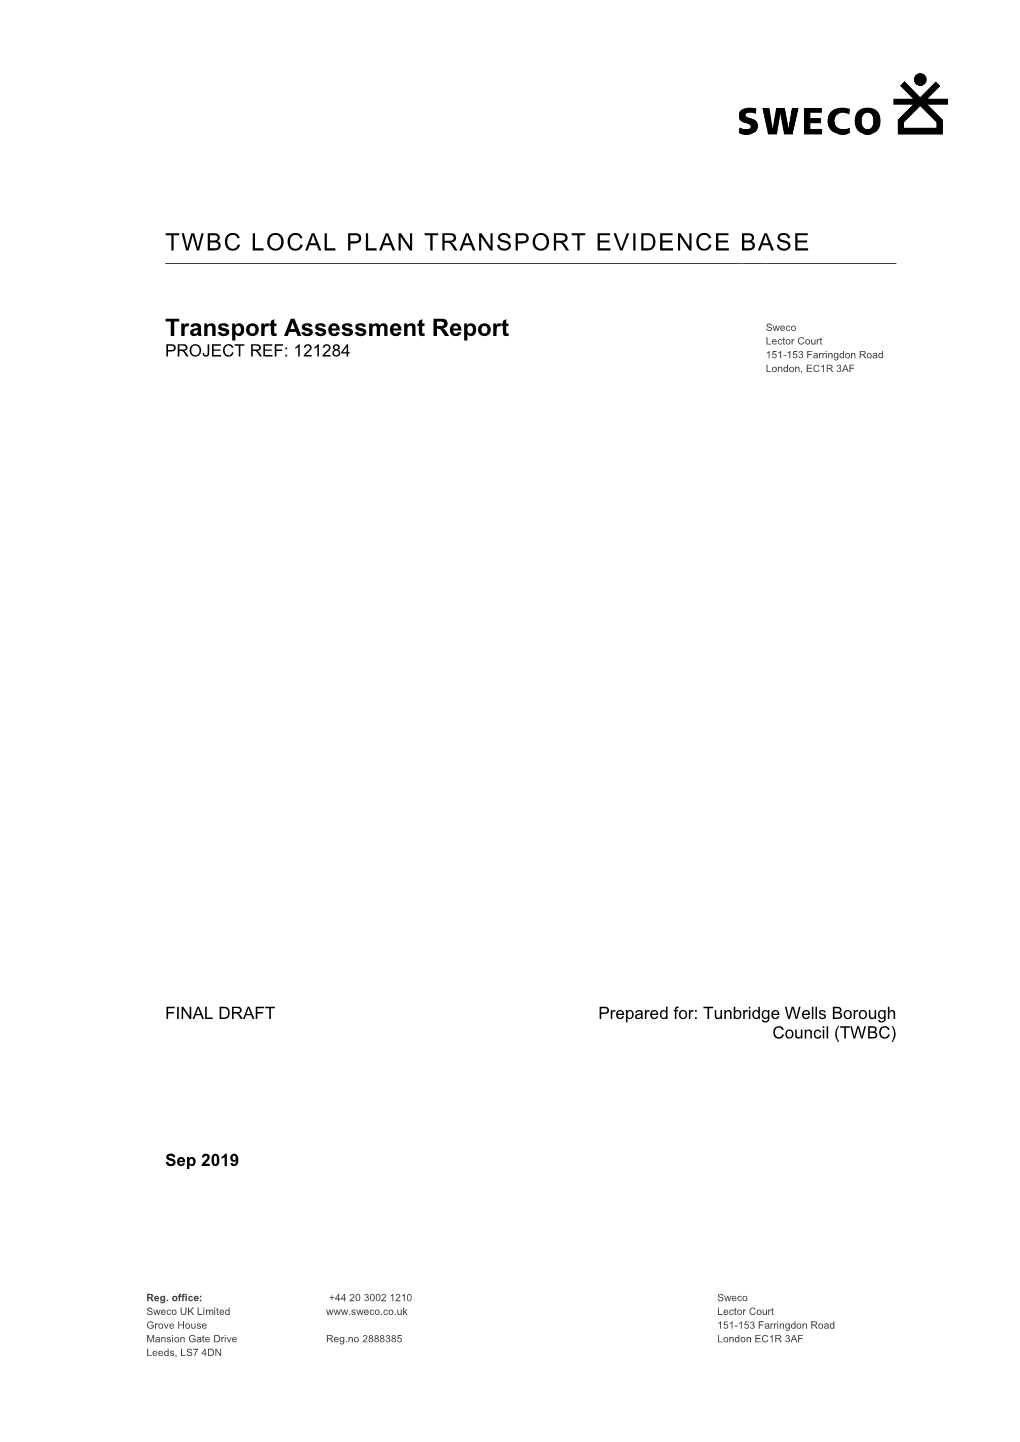 Local Plan Transport Evidence Base